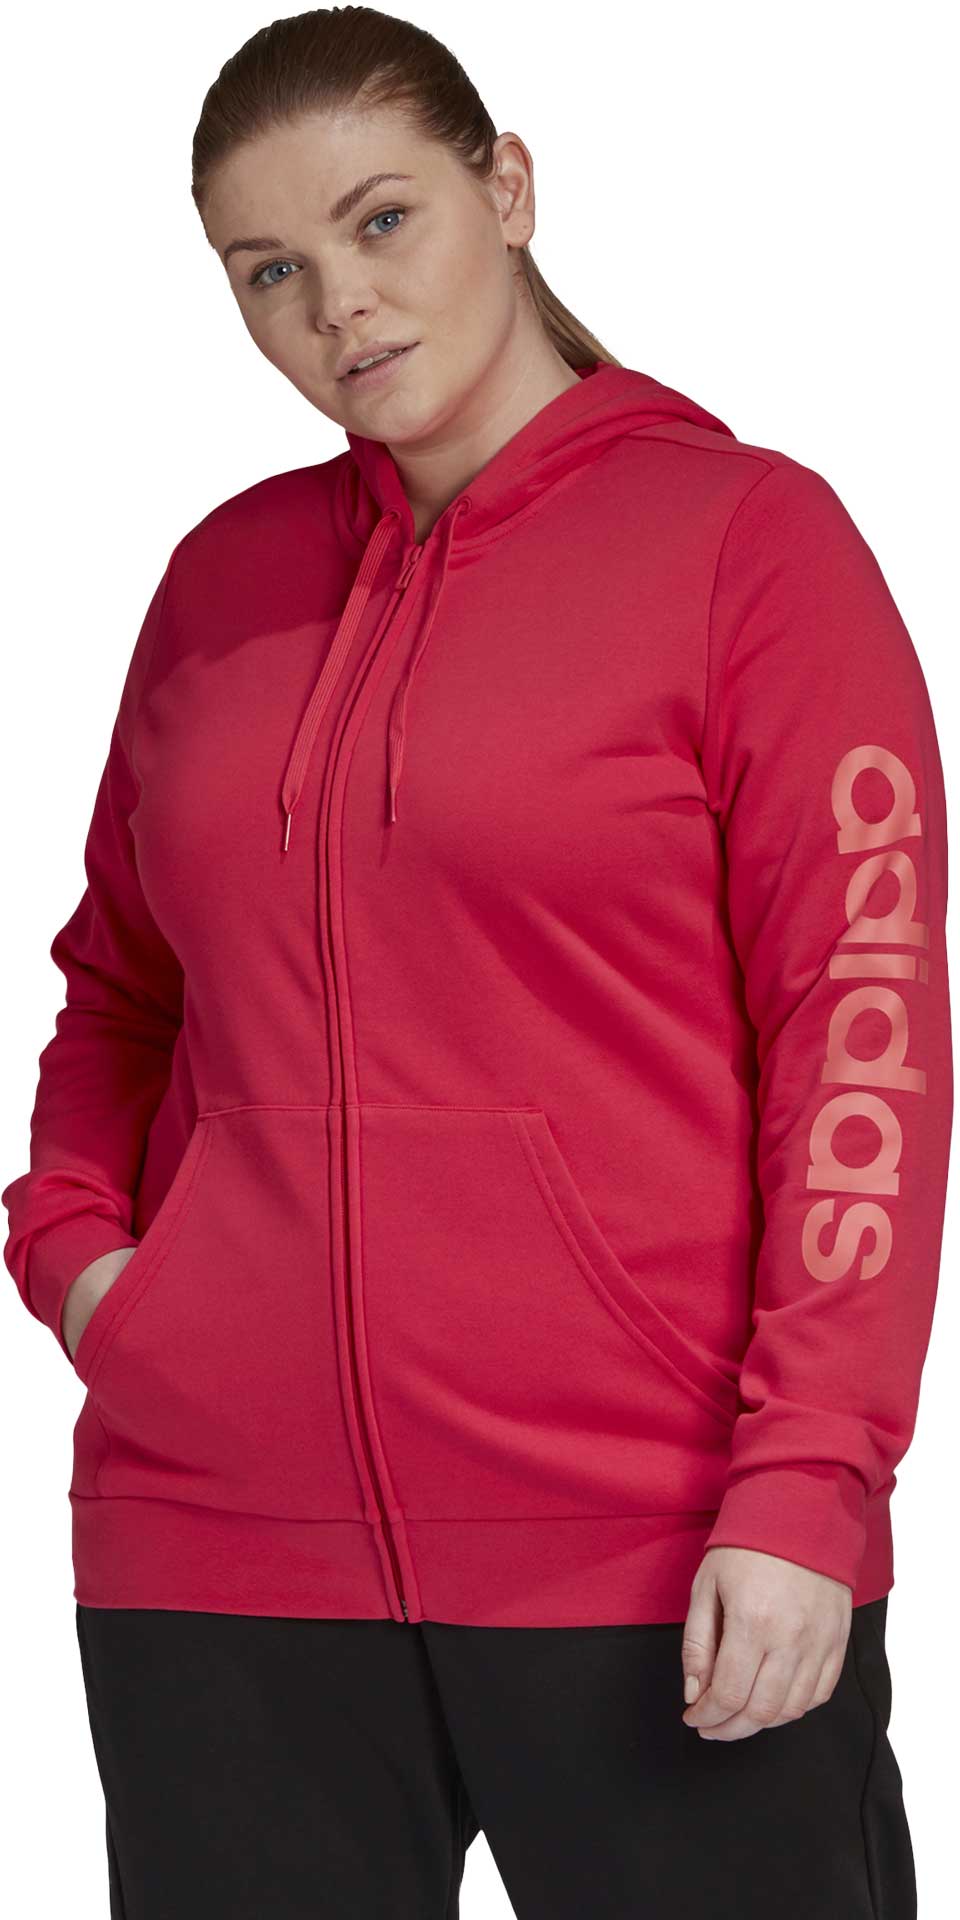 Women’s hoodie